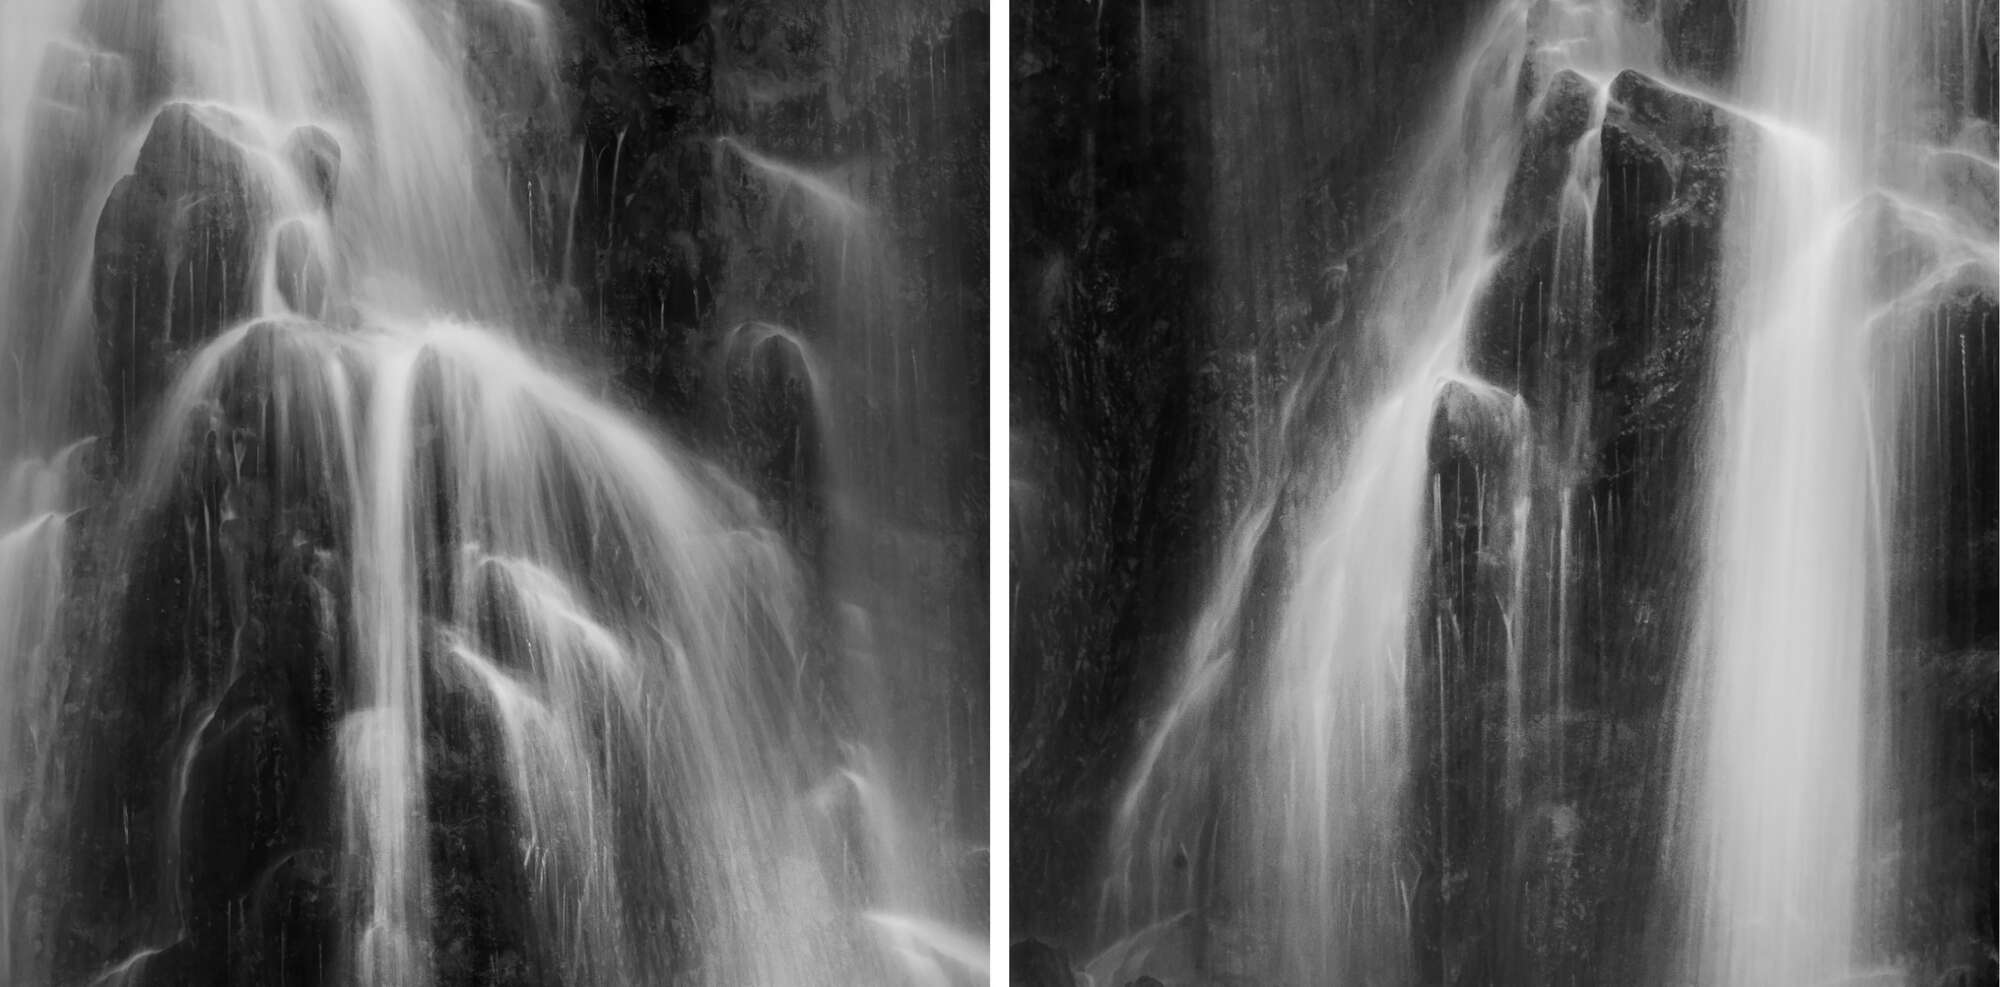 Waterfall Study by Michael Pilkinton aspect2i